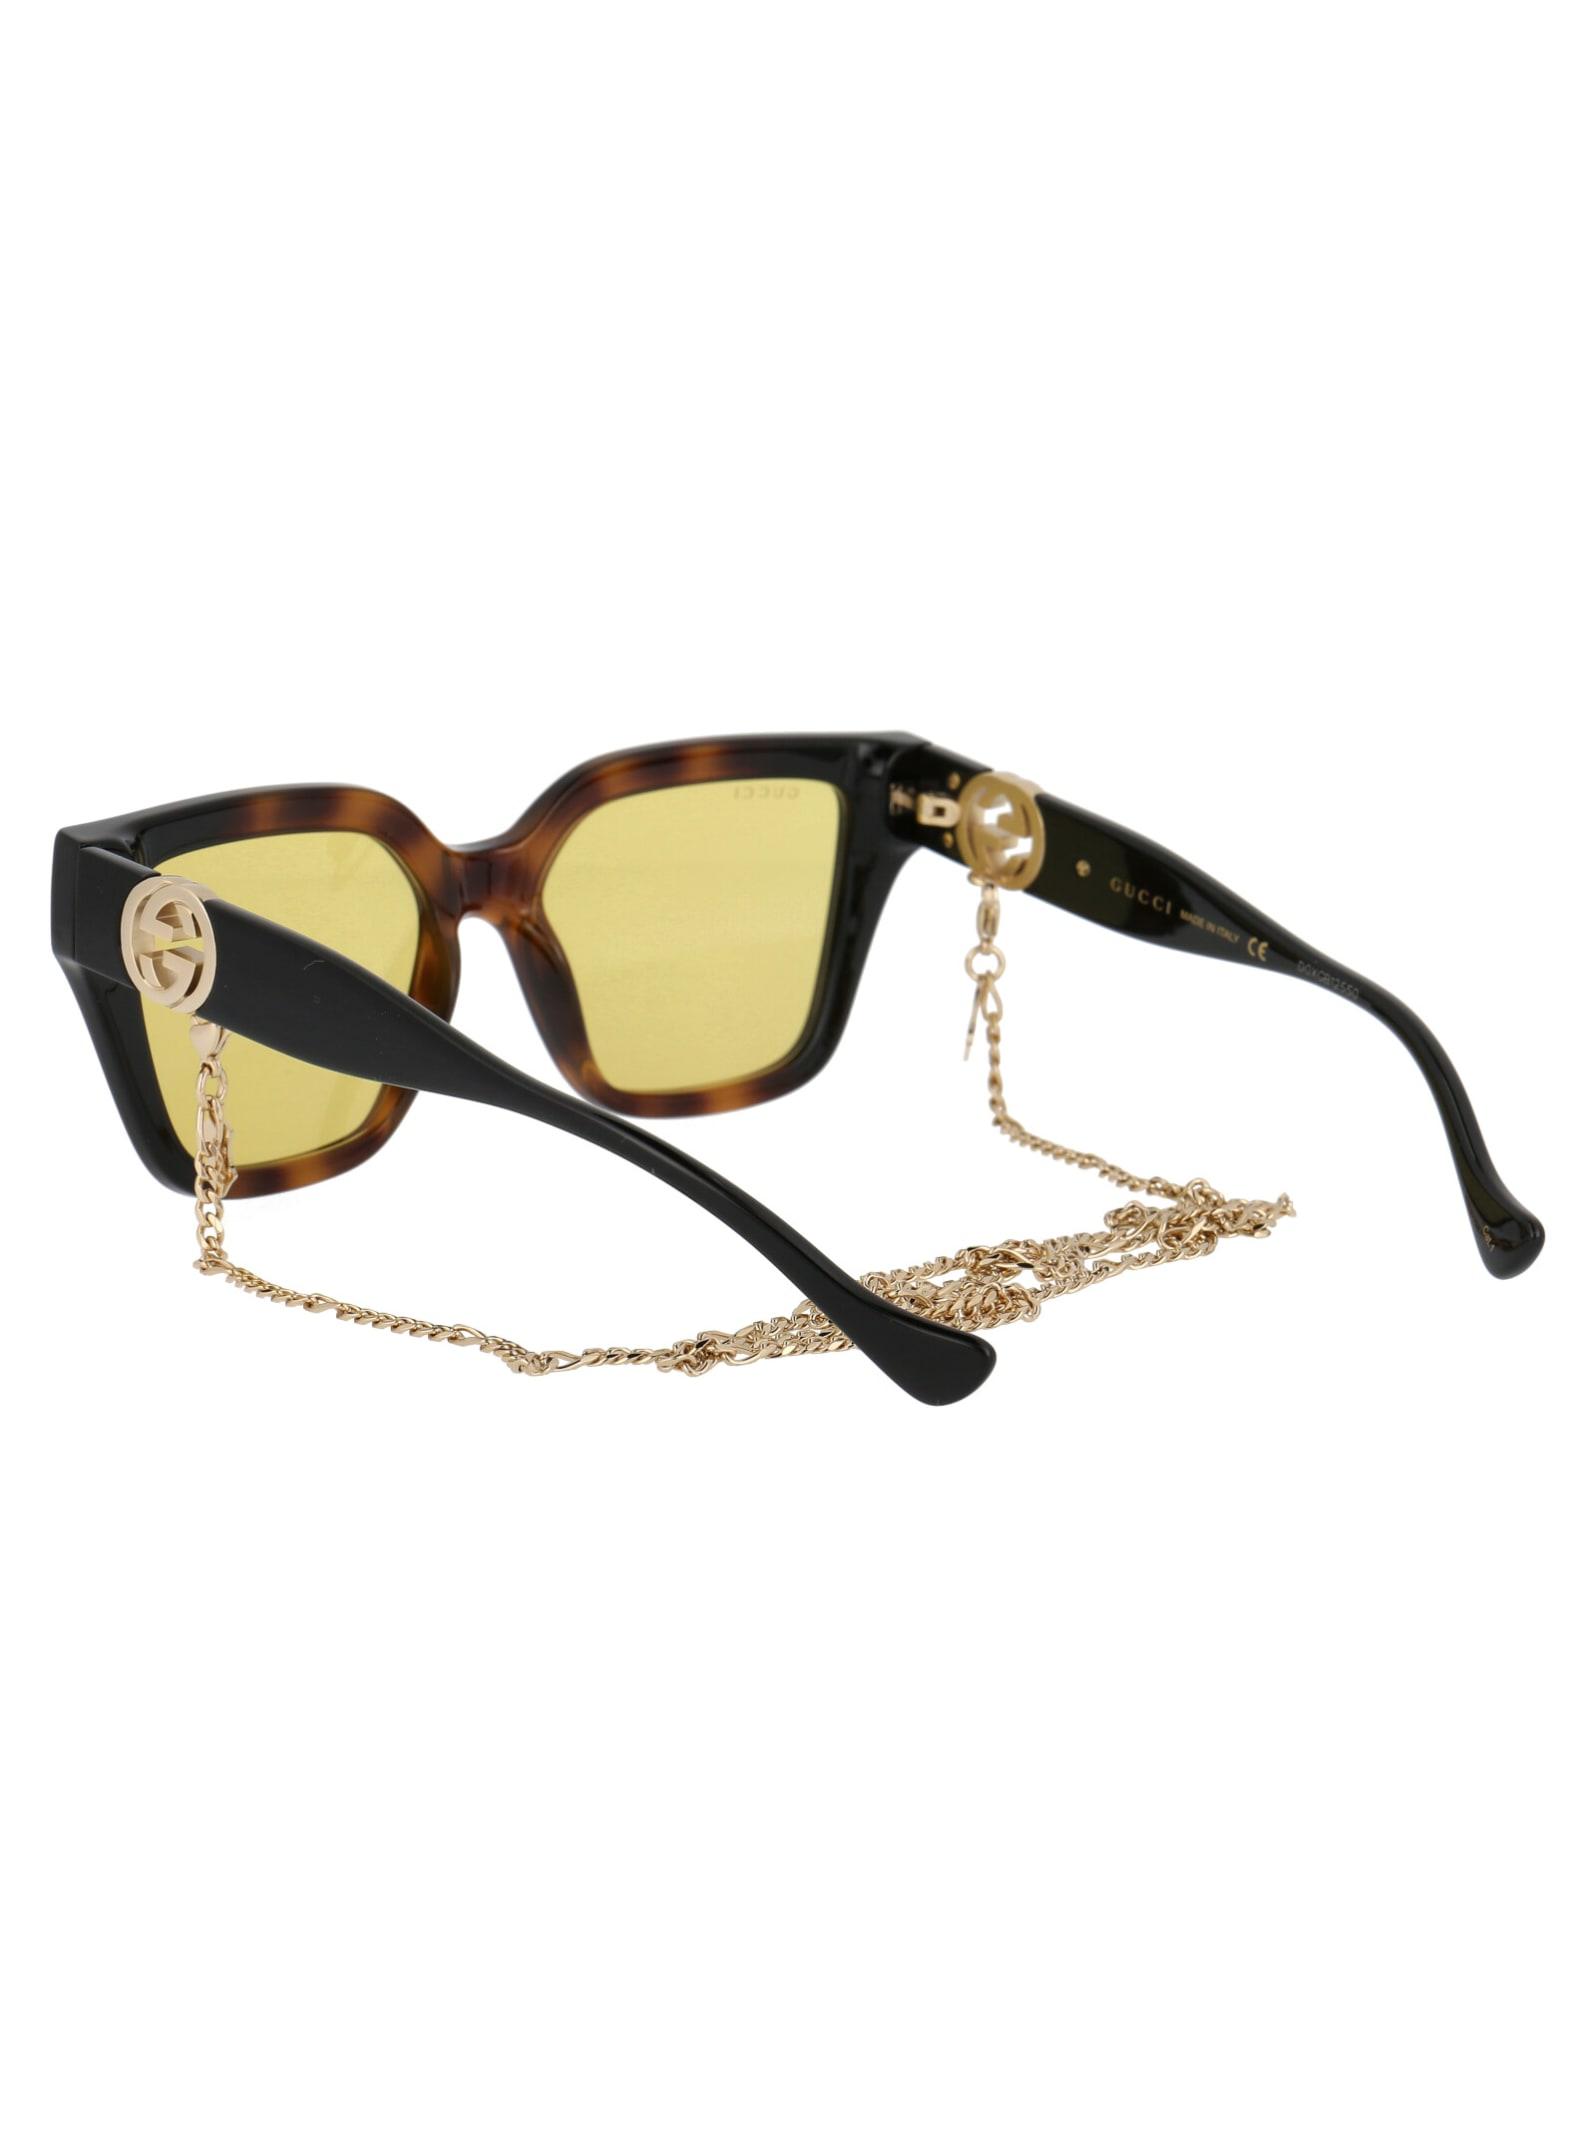 NEW Gucci GG1023S - 004 Havana Sunglasses